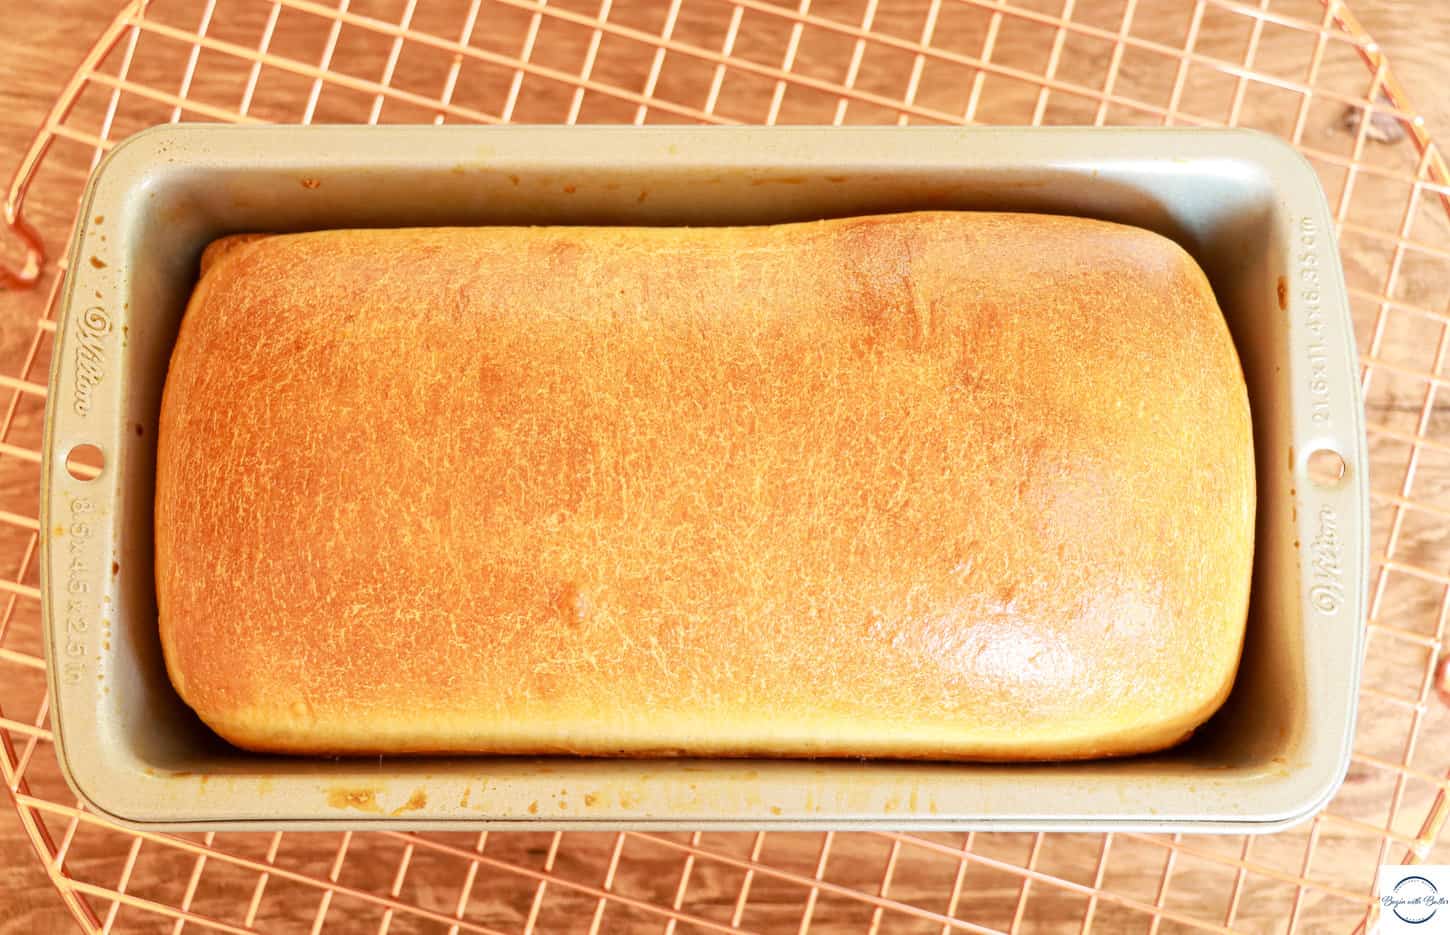 4.5 x 8.5 Loaf Pan - Whisk